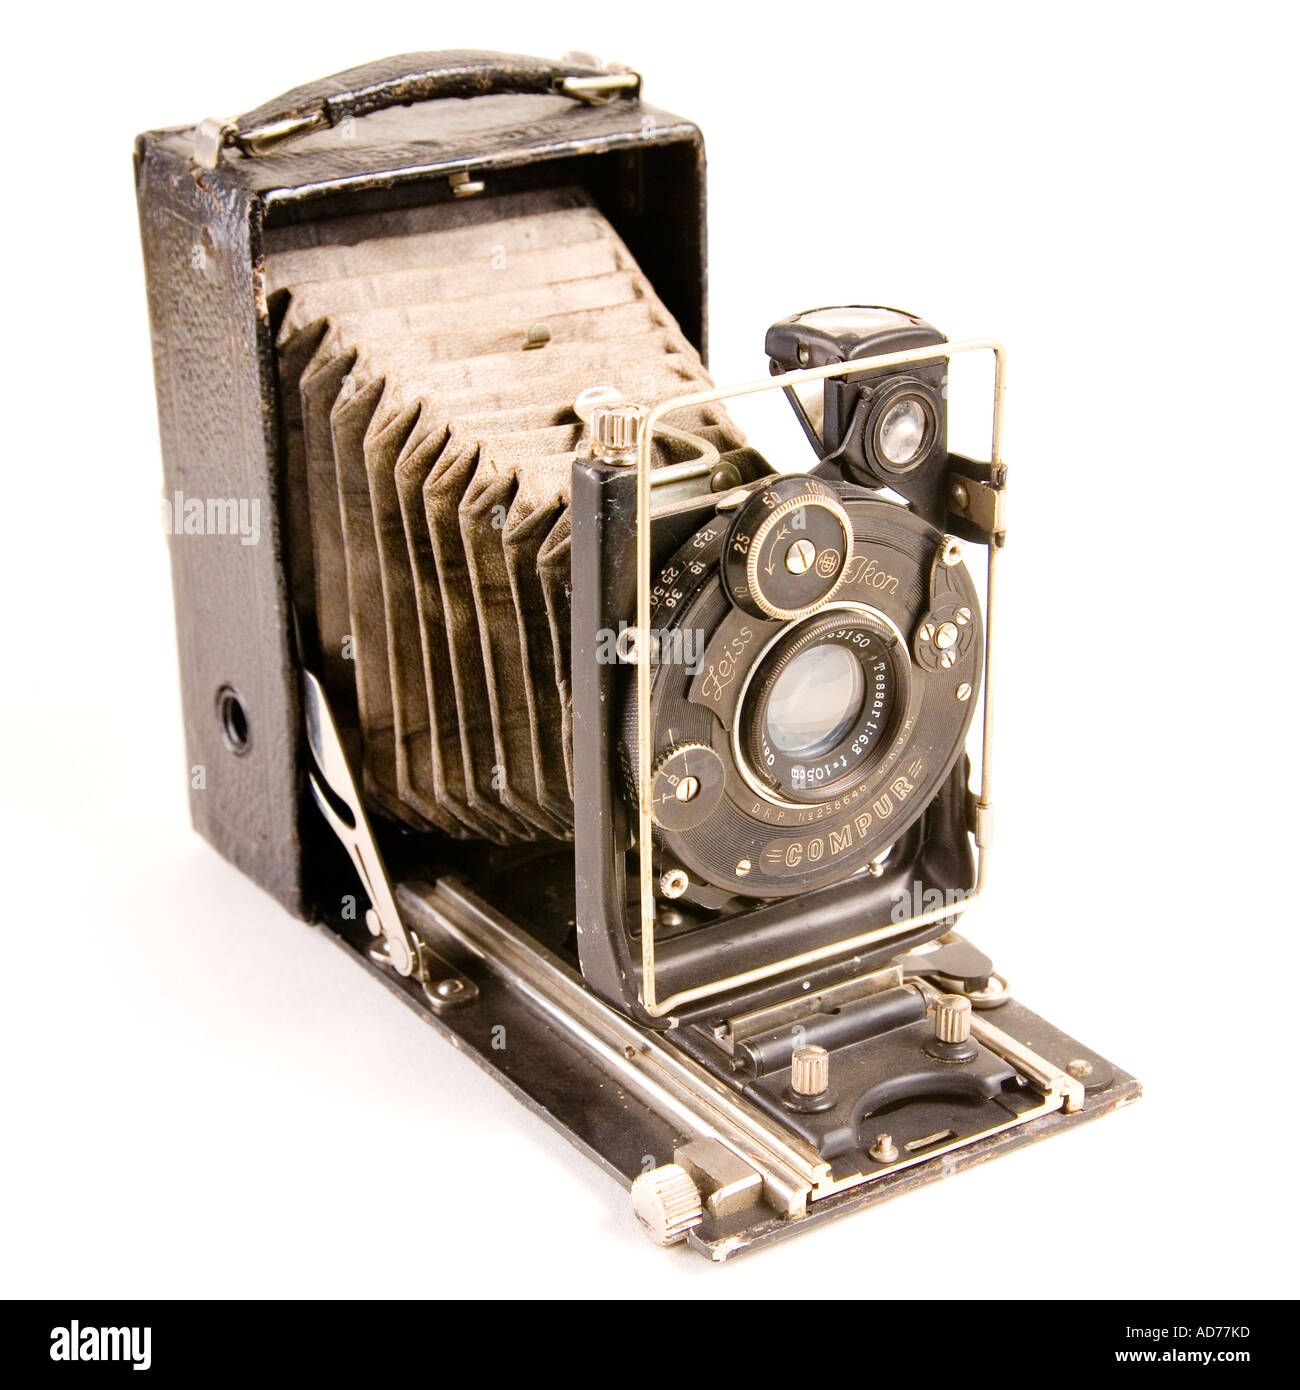 Vecchia macchina fotografica (Zeiss ikon compur Foto stock - Alamy